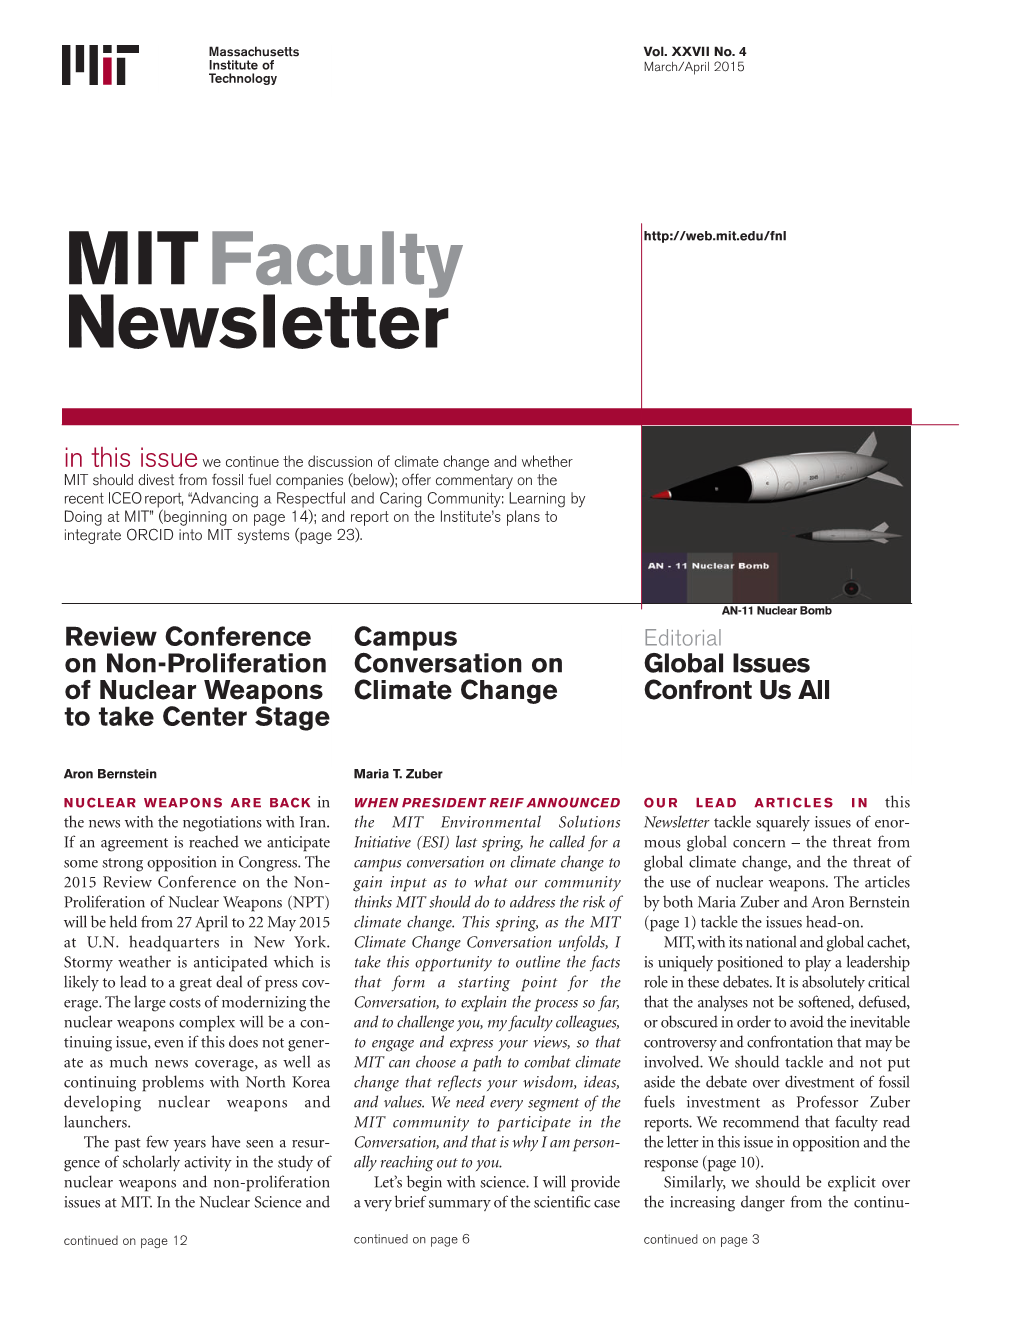 MIT Faculty Newsletter, Vol. XXVII No. 4, March/April 2015